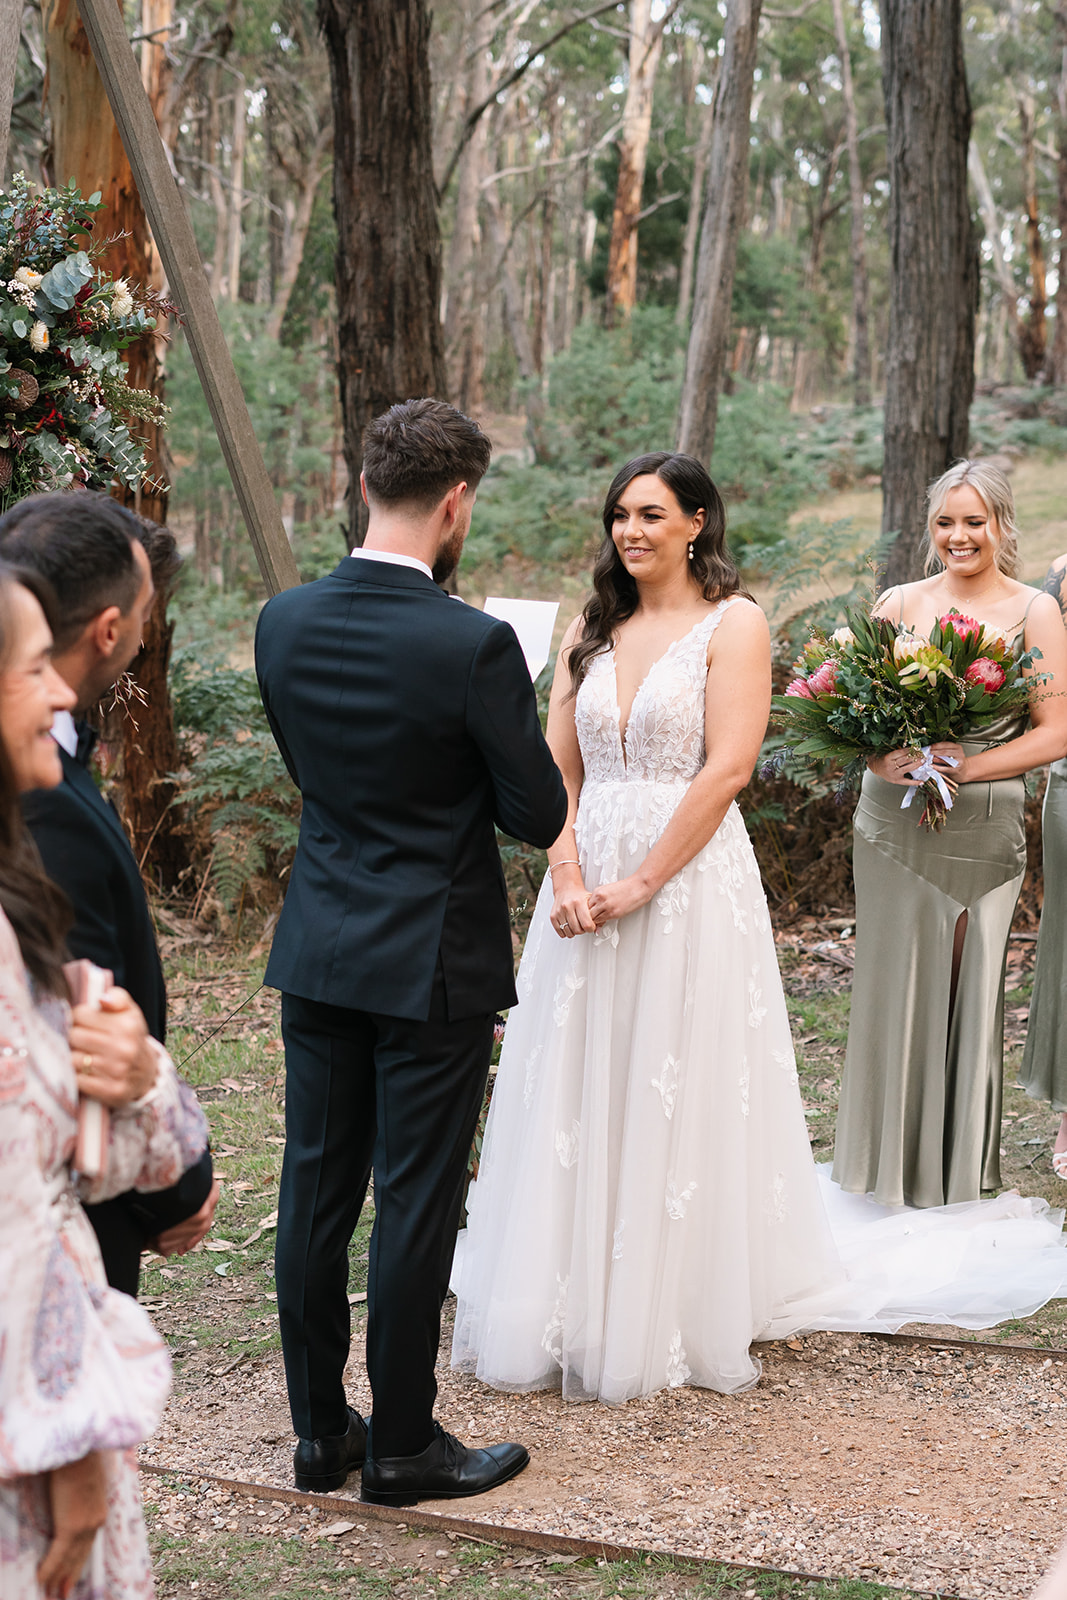 Denver, Victoria Wedding | Melbourne Wedding Photographer